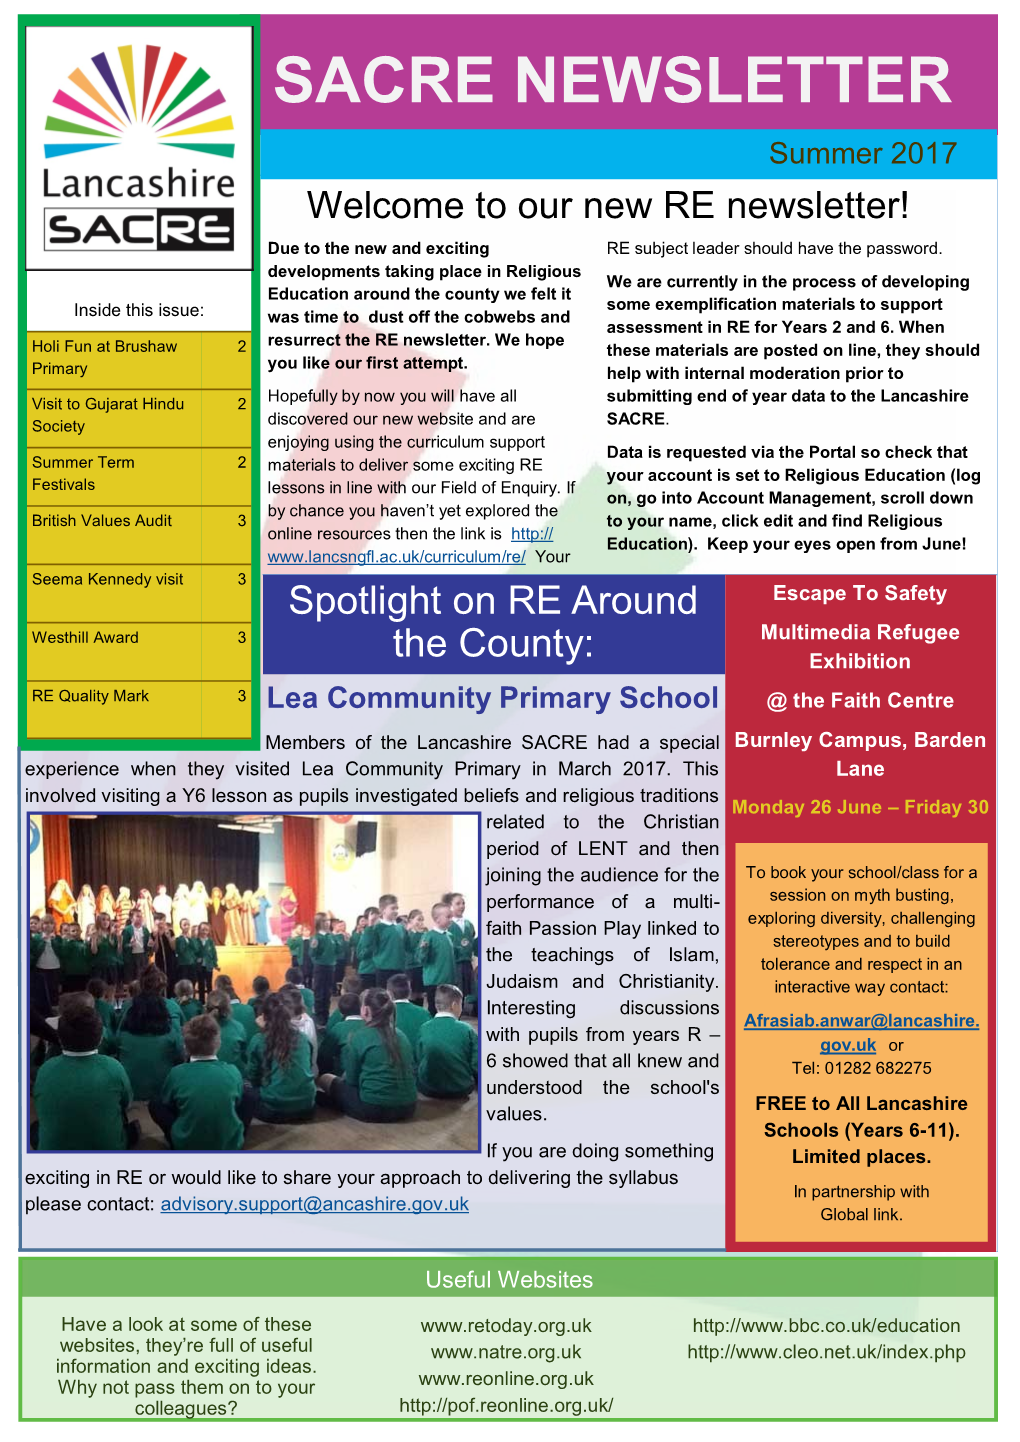 SACRE Newsletter Summer 2017.Pdf